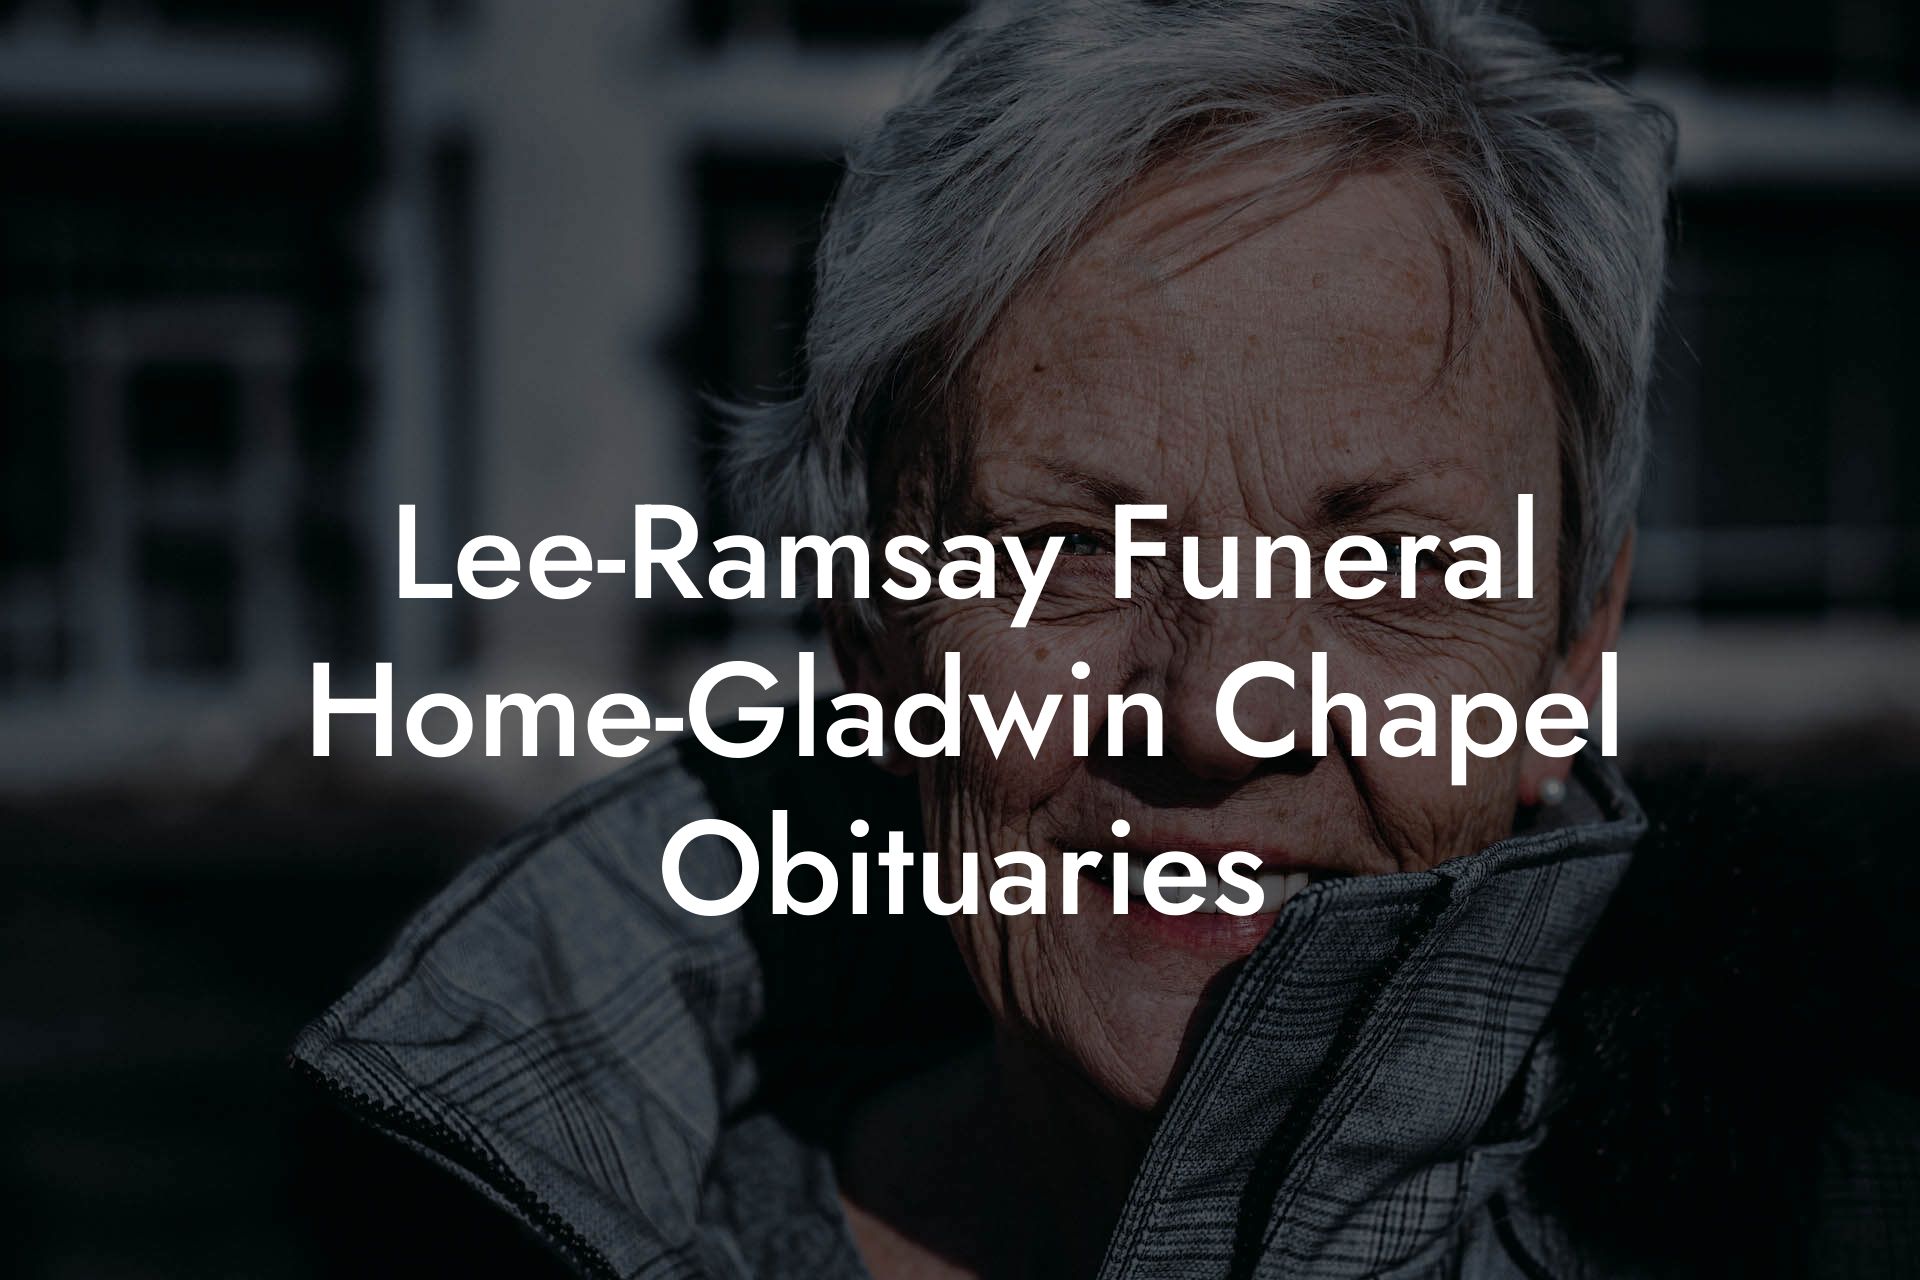 Lee-Ramsay Funeral Home-Gladwin Chapel Obituaries